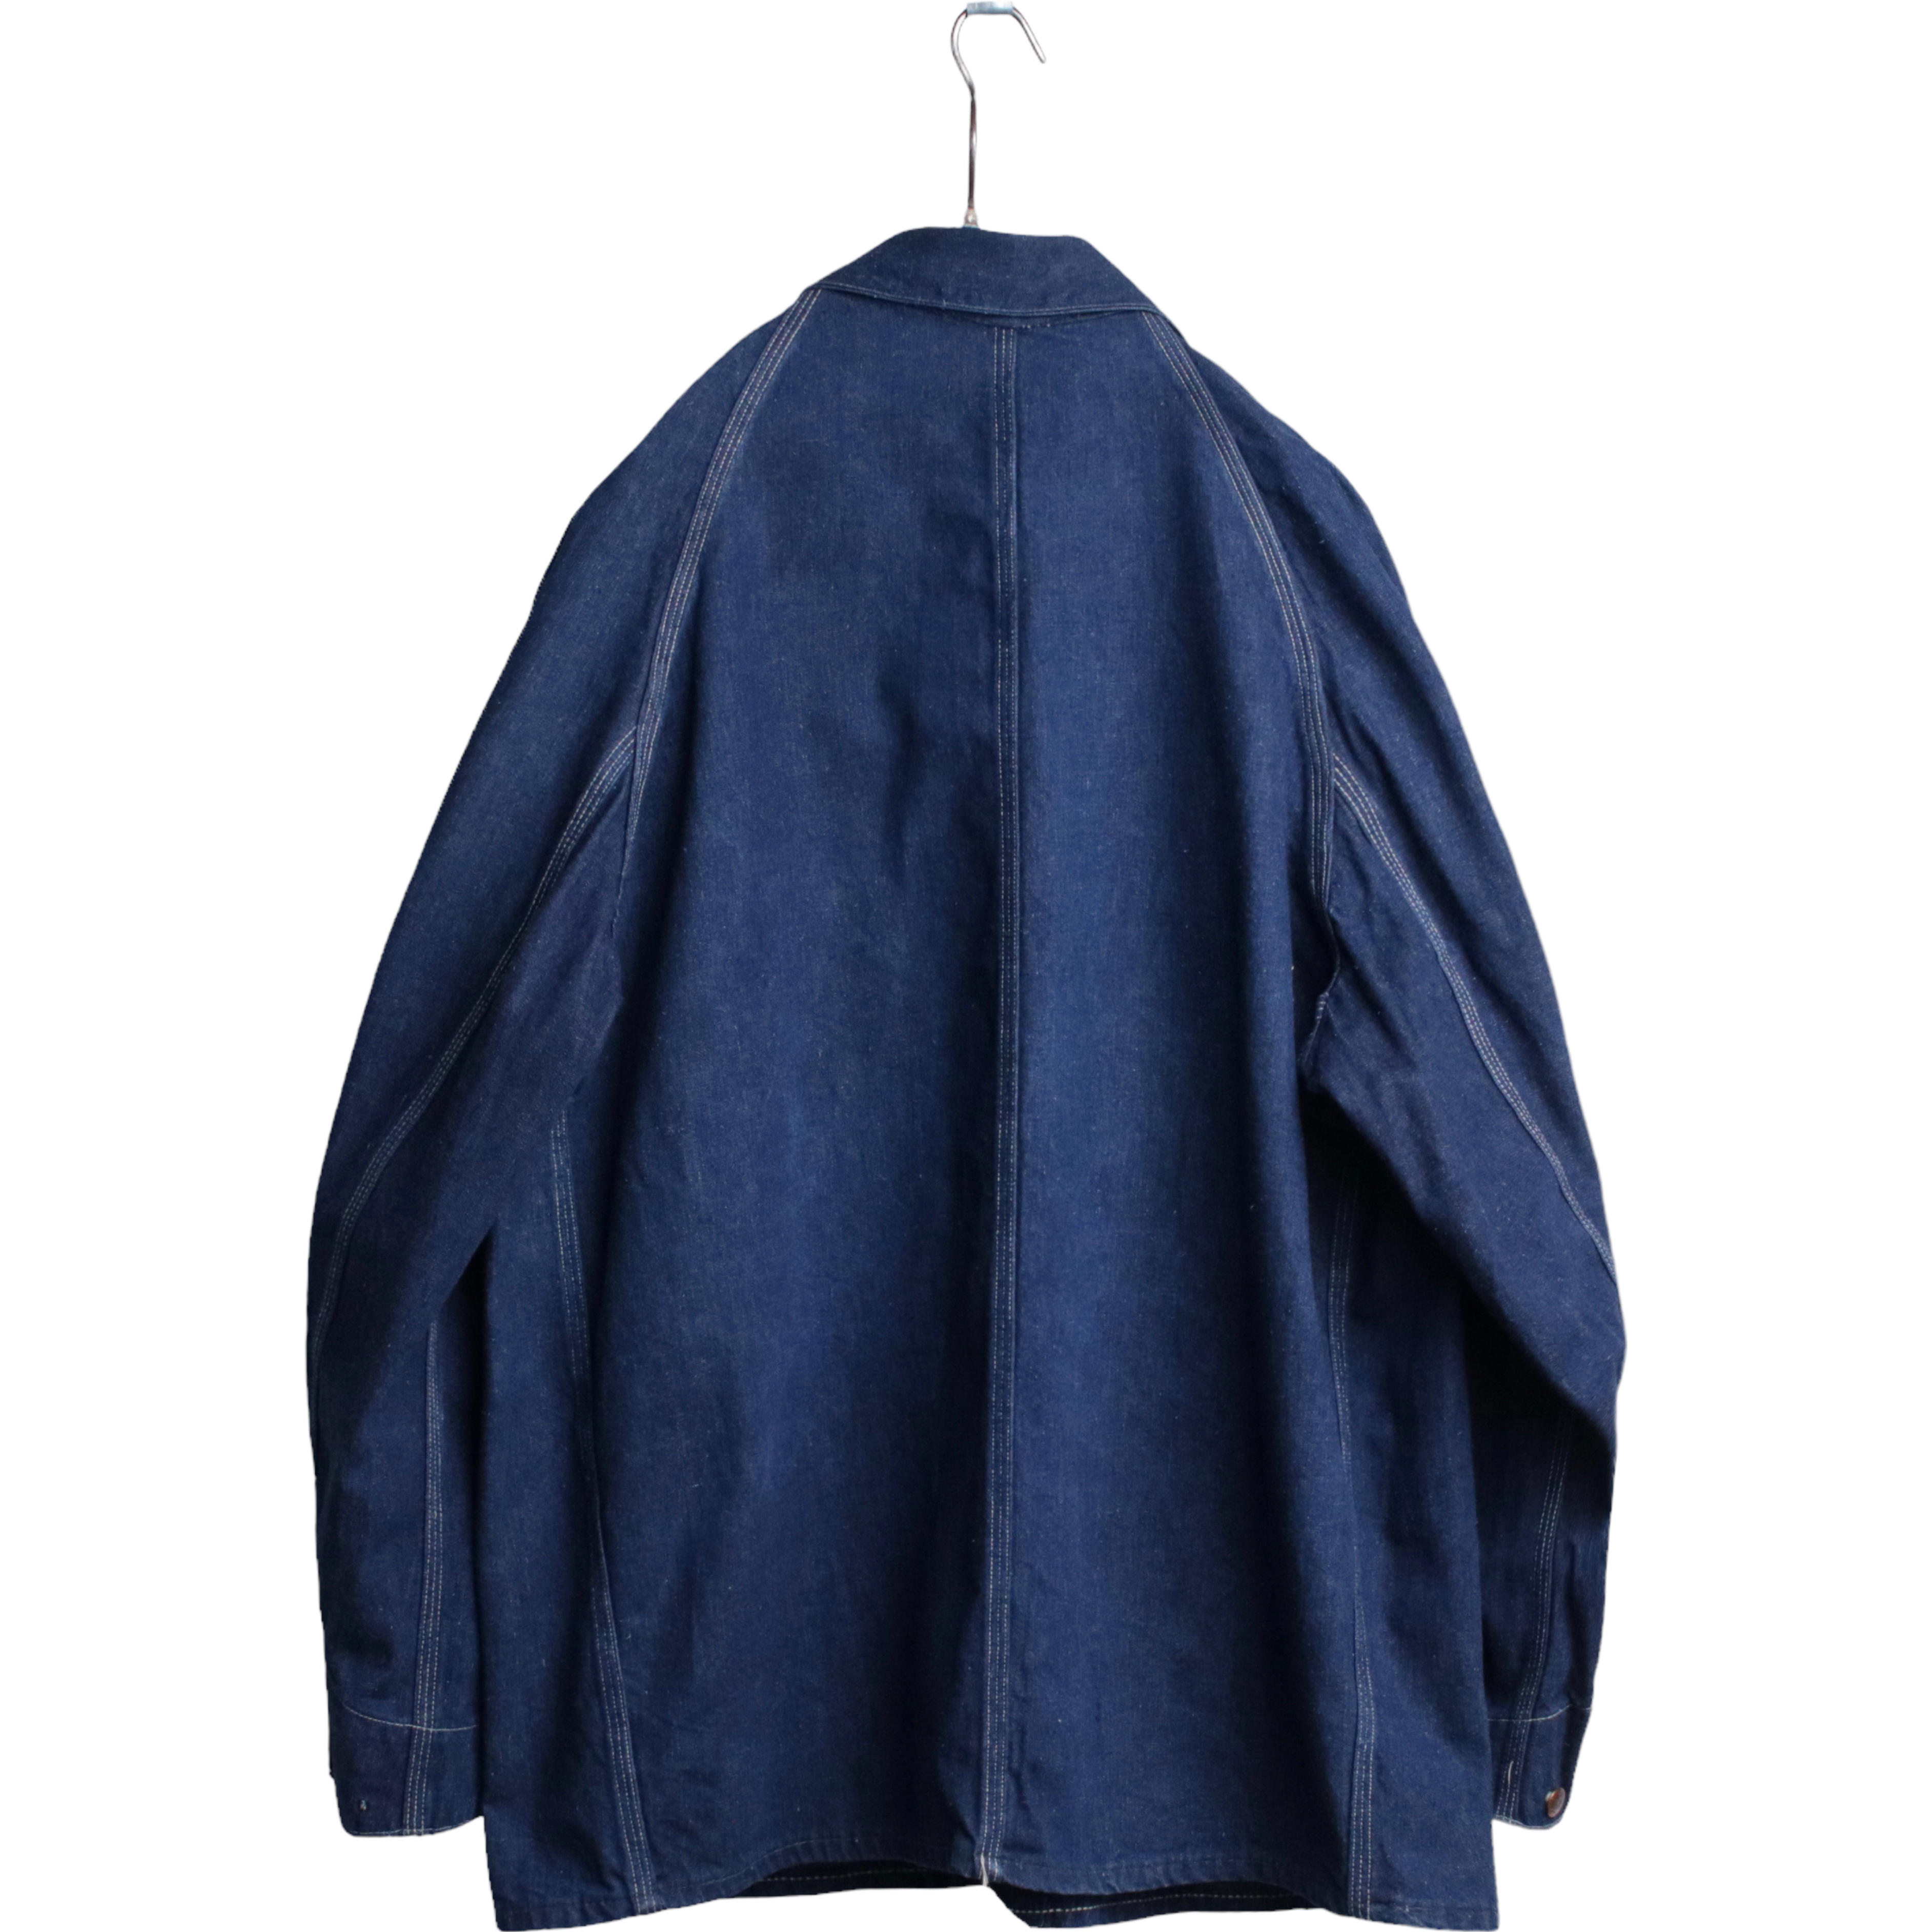 50s 60s カバーオール インディゴブルー 濃紺 ワークジャケット デニム